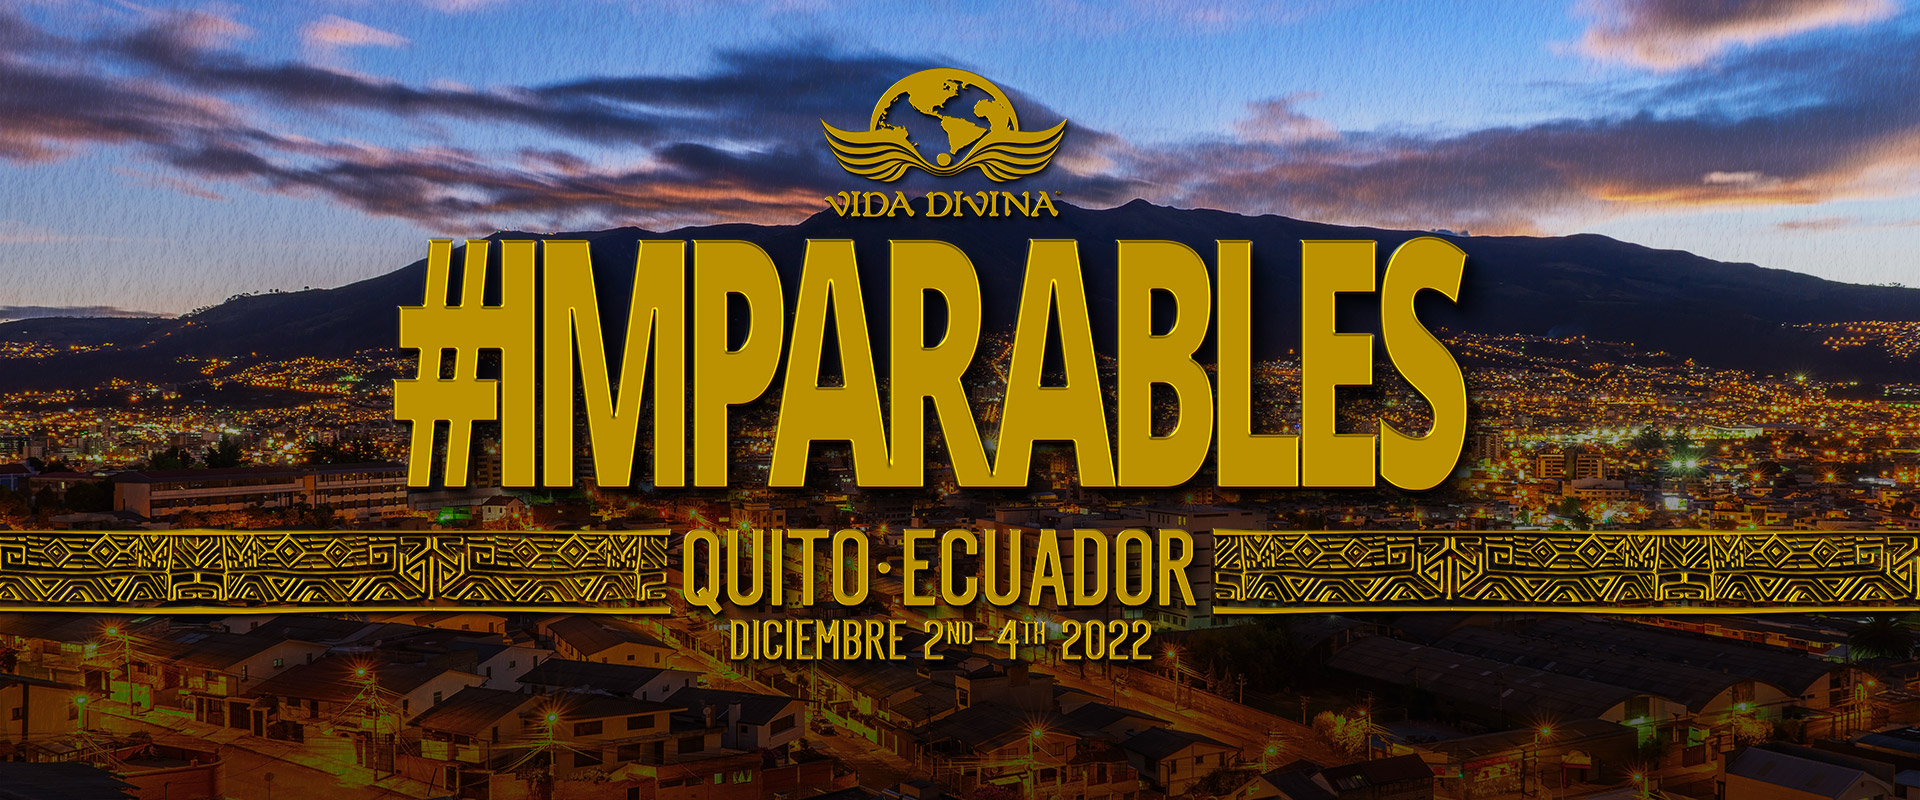 Imparables - Ecuador